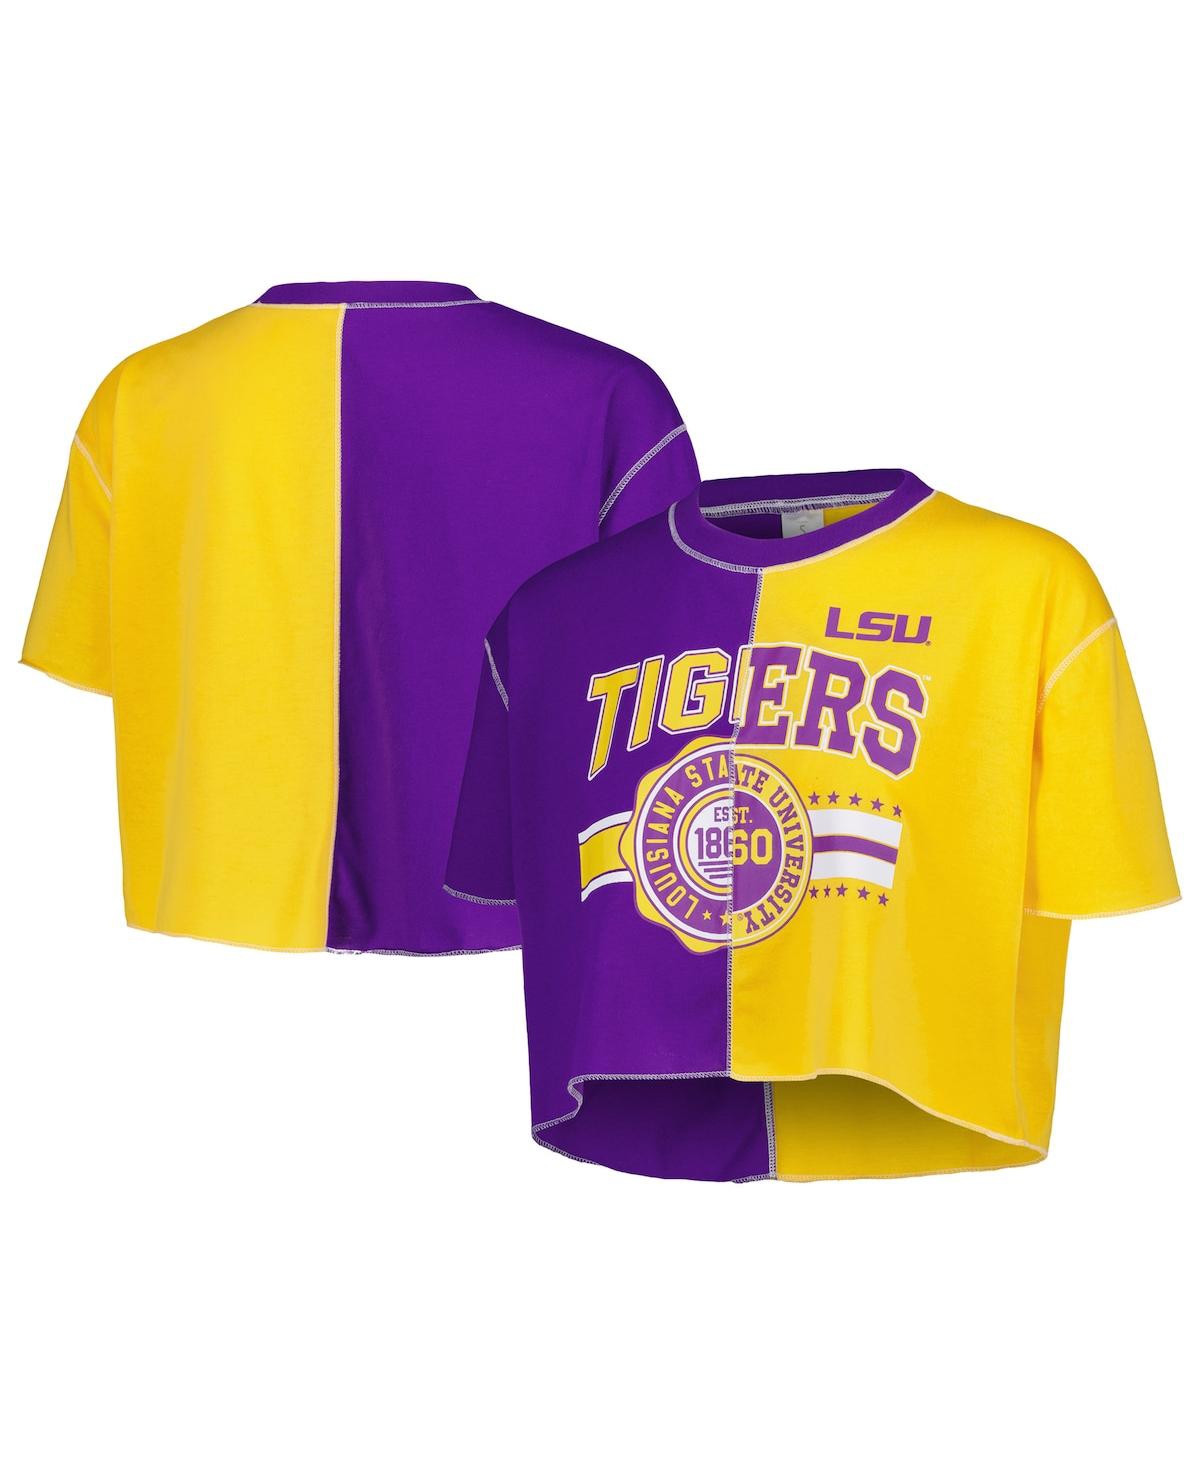 Women's ZooZatz Purple, Gold Lsu Tigers Colorblock Cropped T-shirt - Purple, Gold